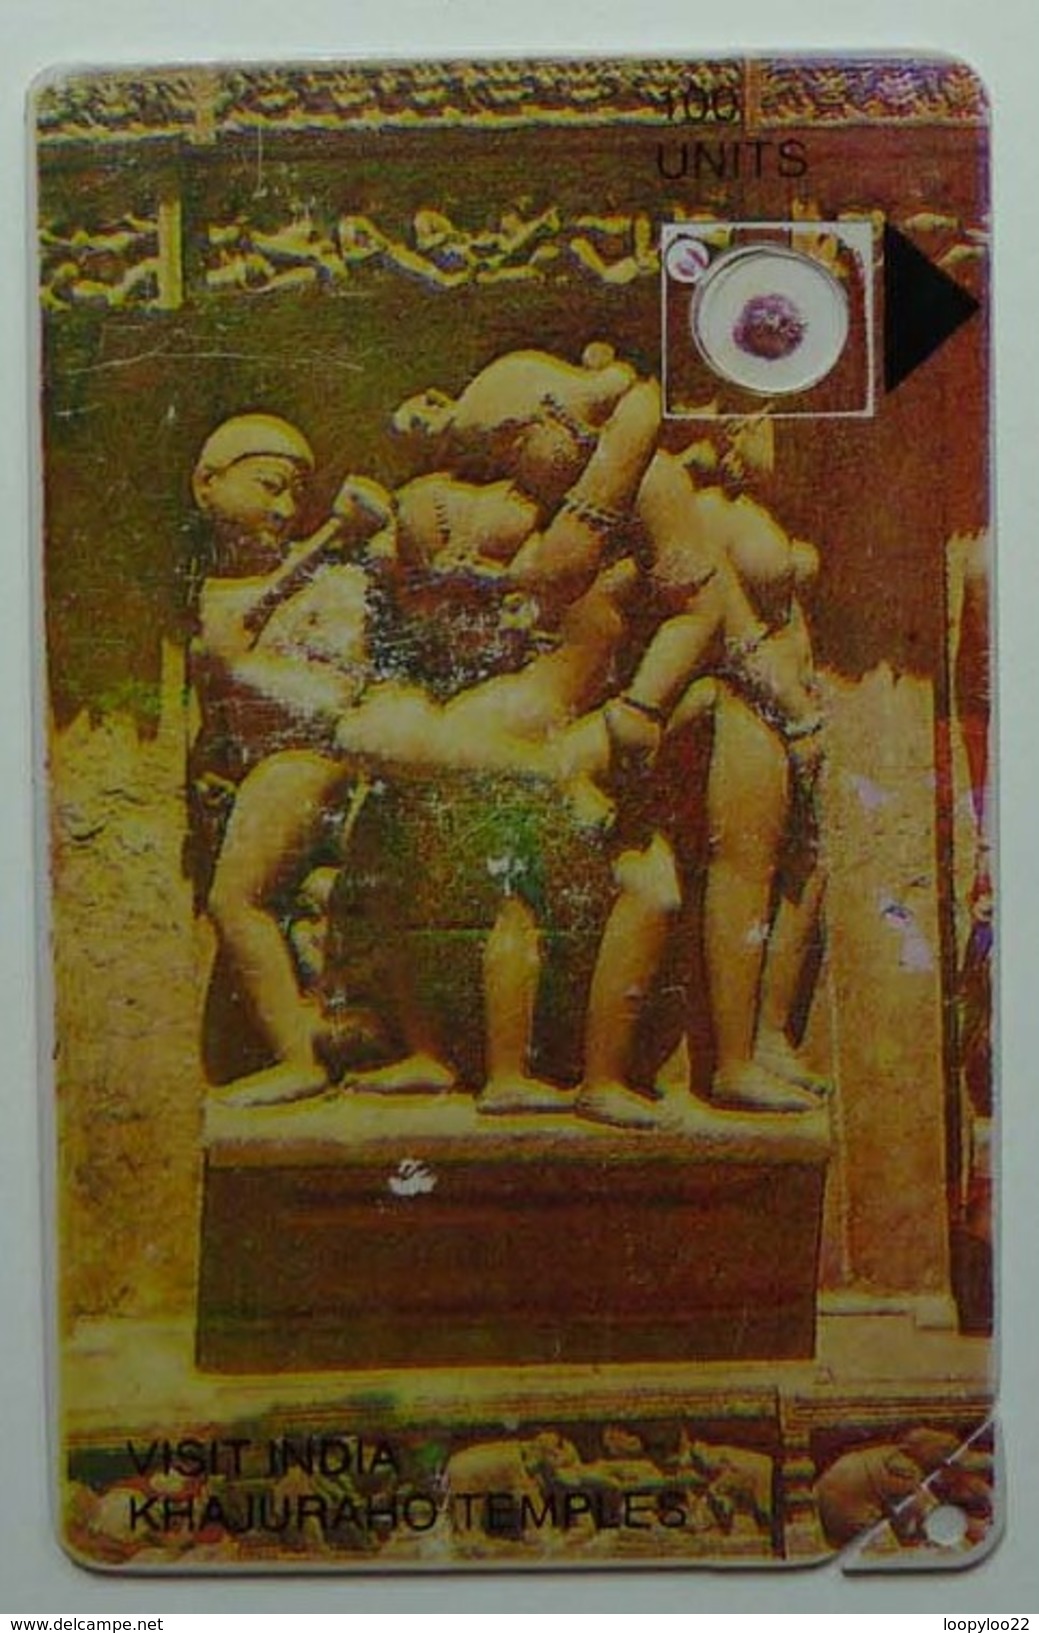 INDIA - 100 Units - Specimen - Very Early Aplab - Visit India Khajuraho Temples - RRR - India